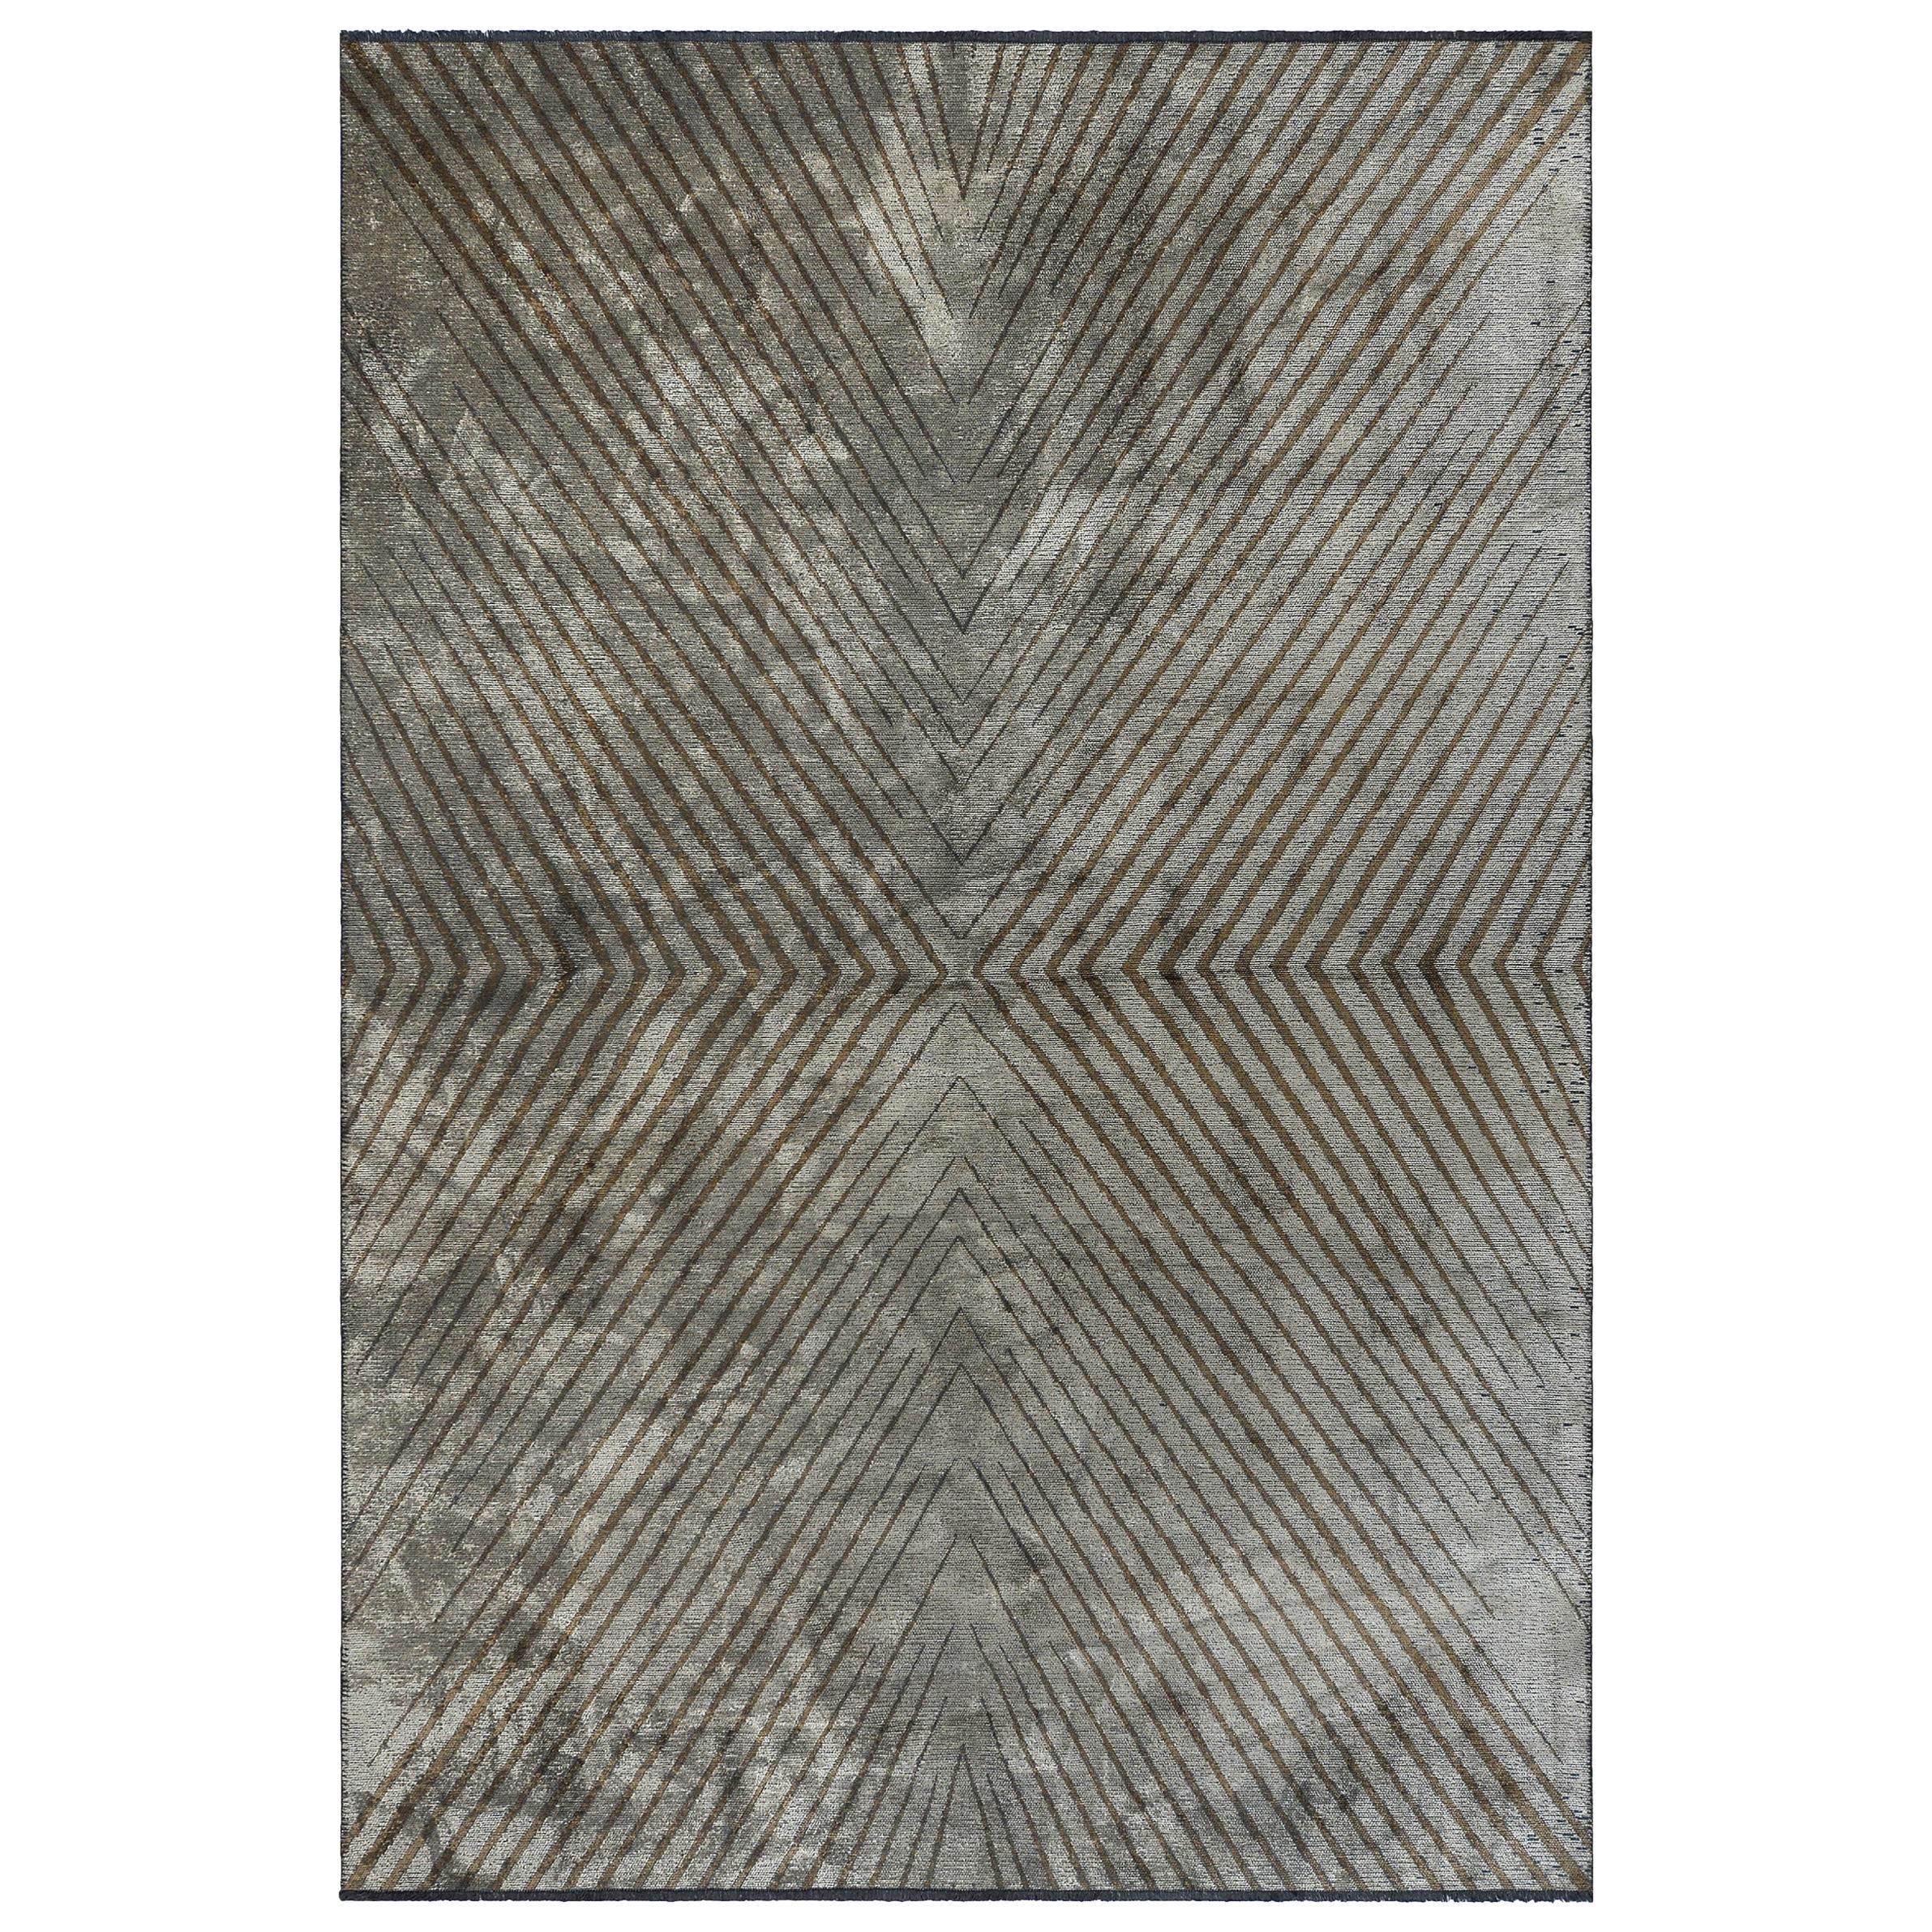 Silver Gray and Brown Contemporary Chevron Pattern Luxury Soft Semi-Plush Rug